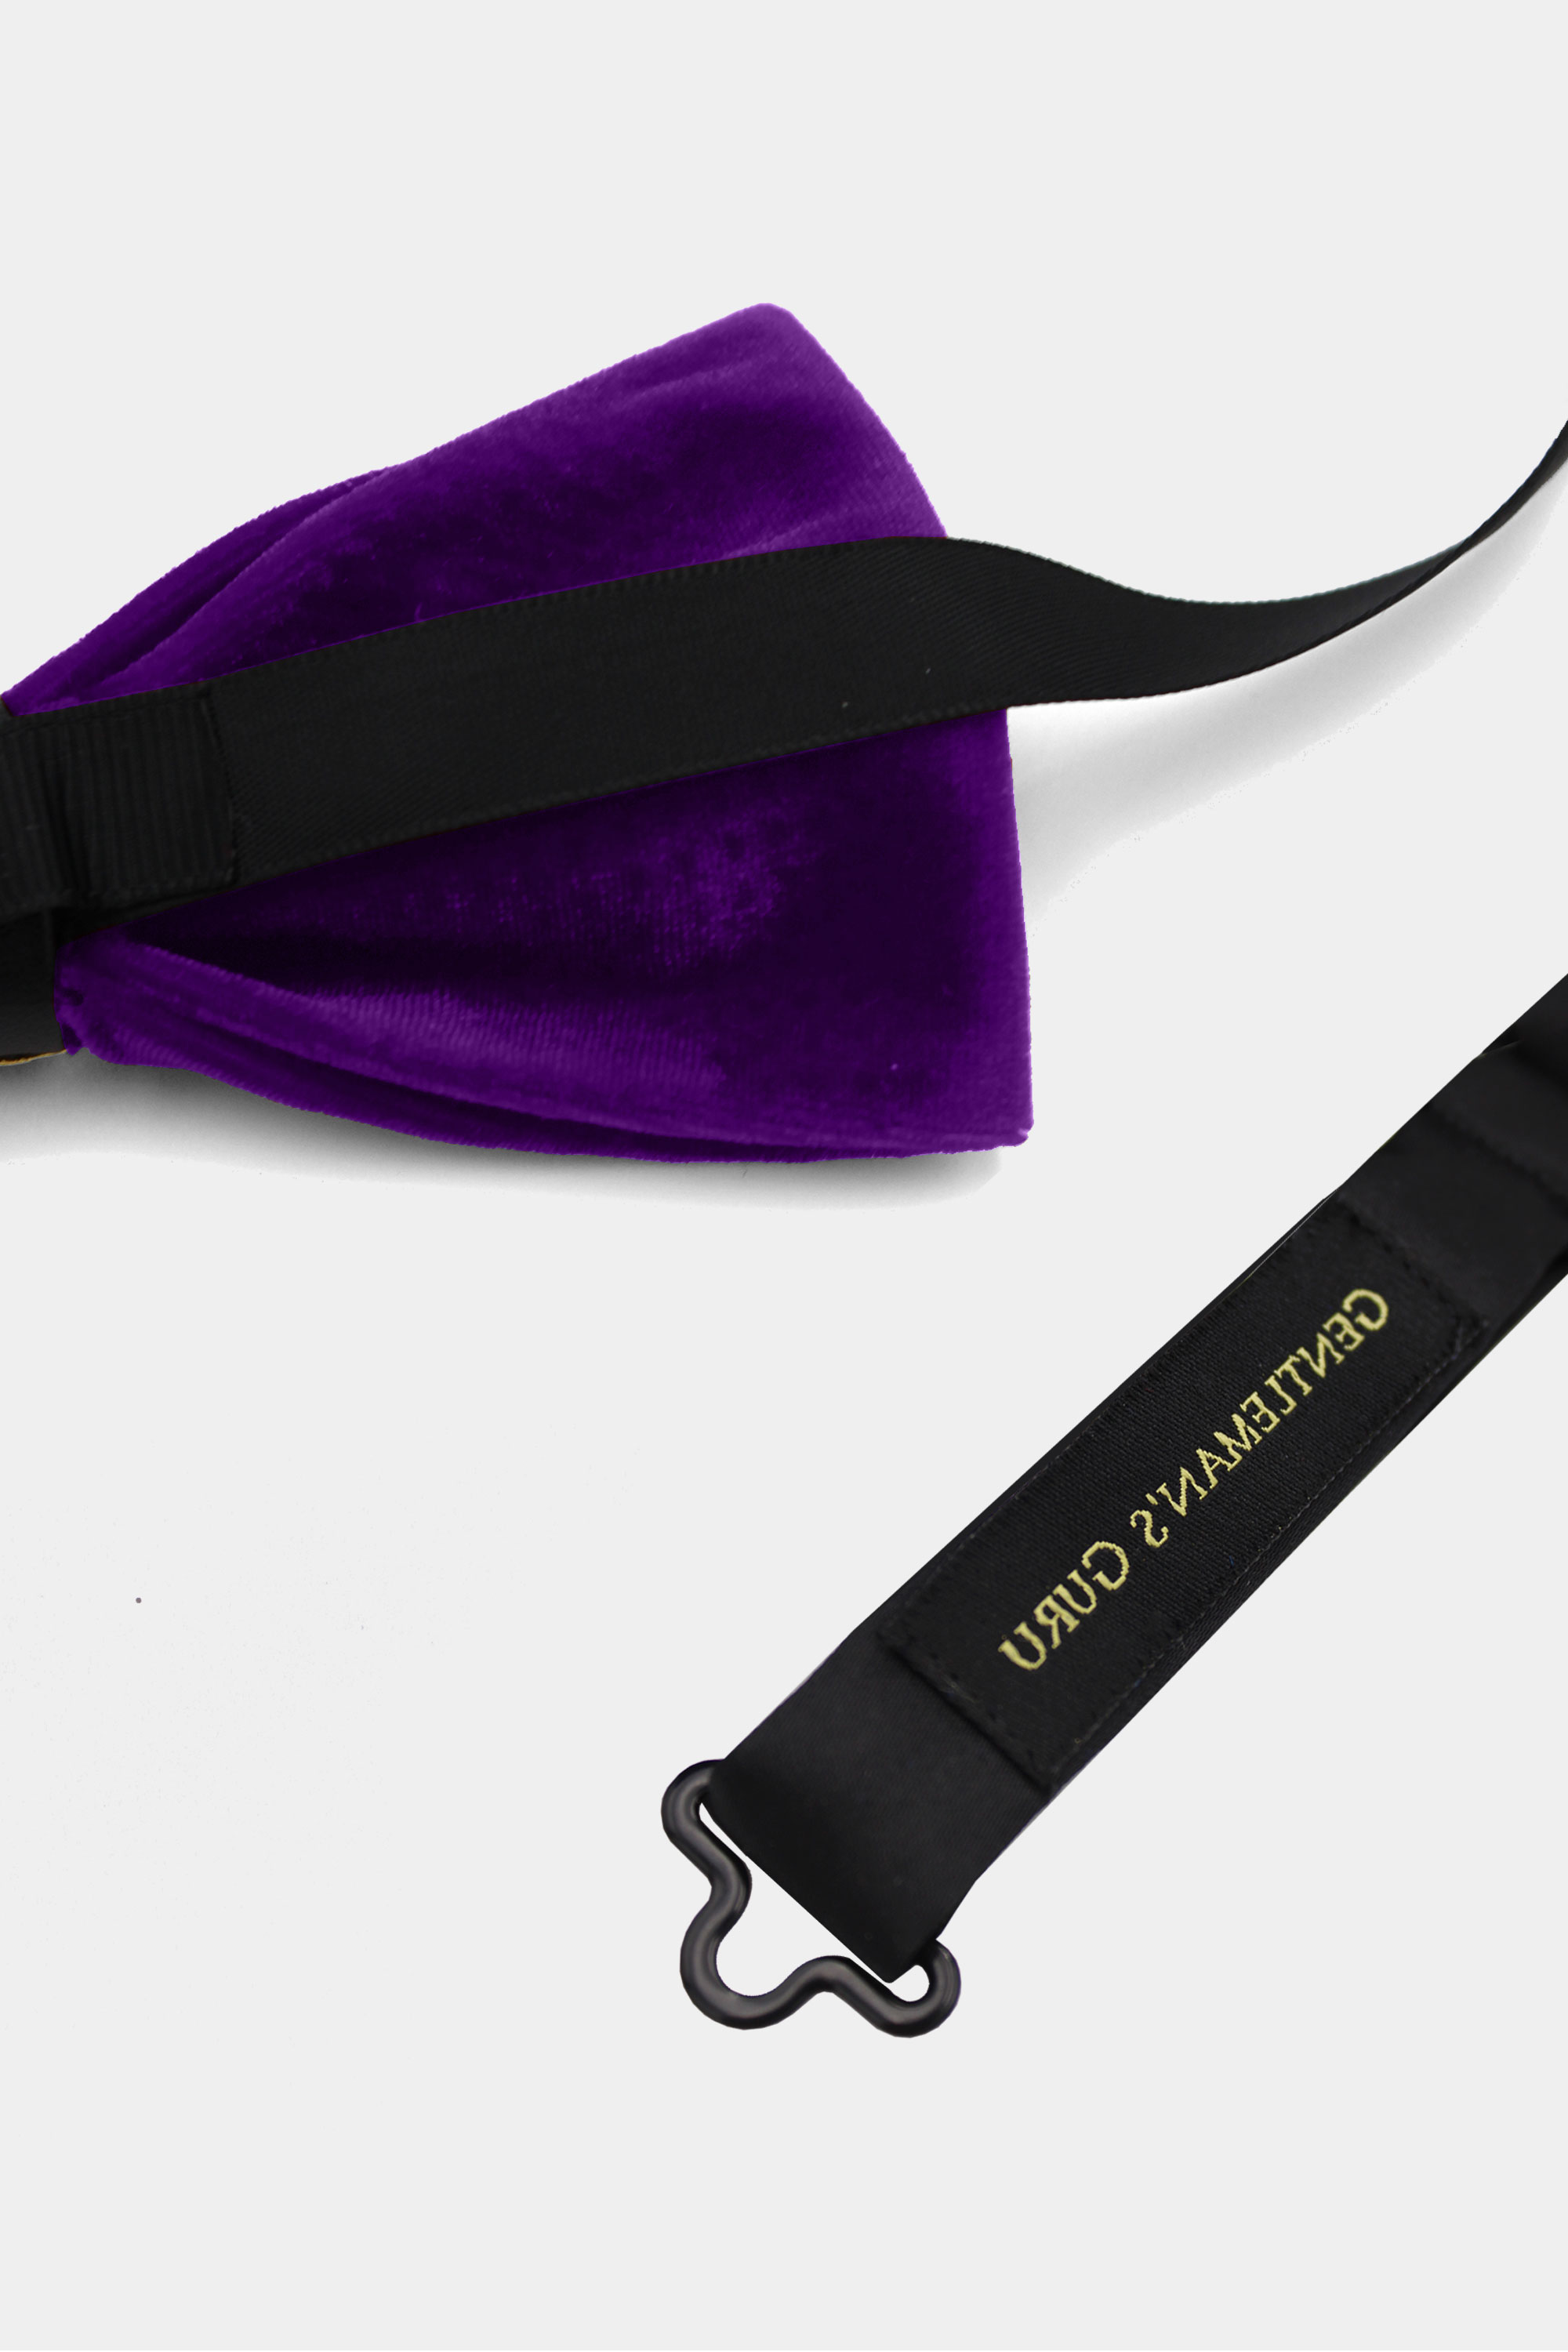 Mens-Purple-Luxury-Crystal-Shiny-Bowtie-from-Gentlemansguru.com